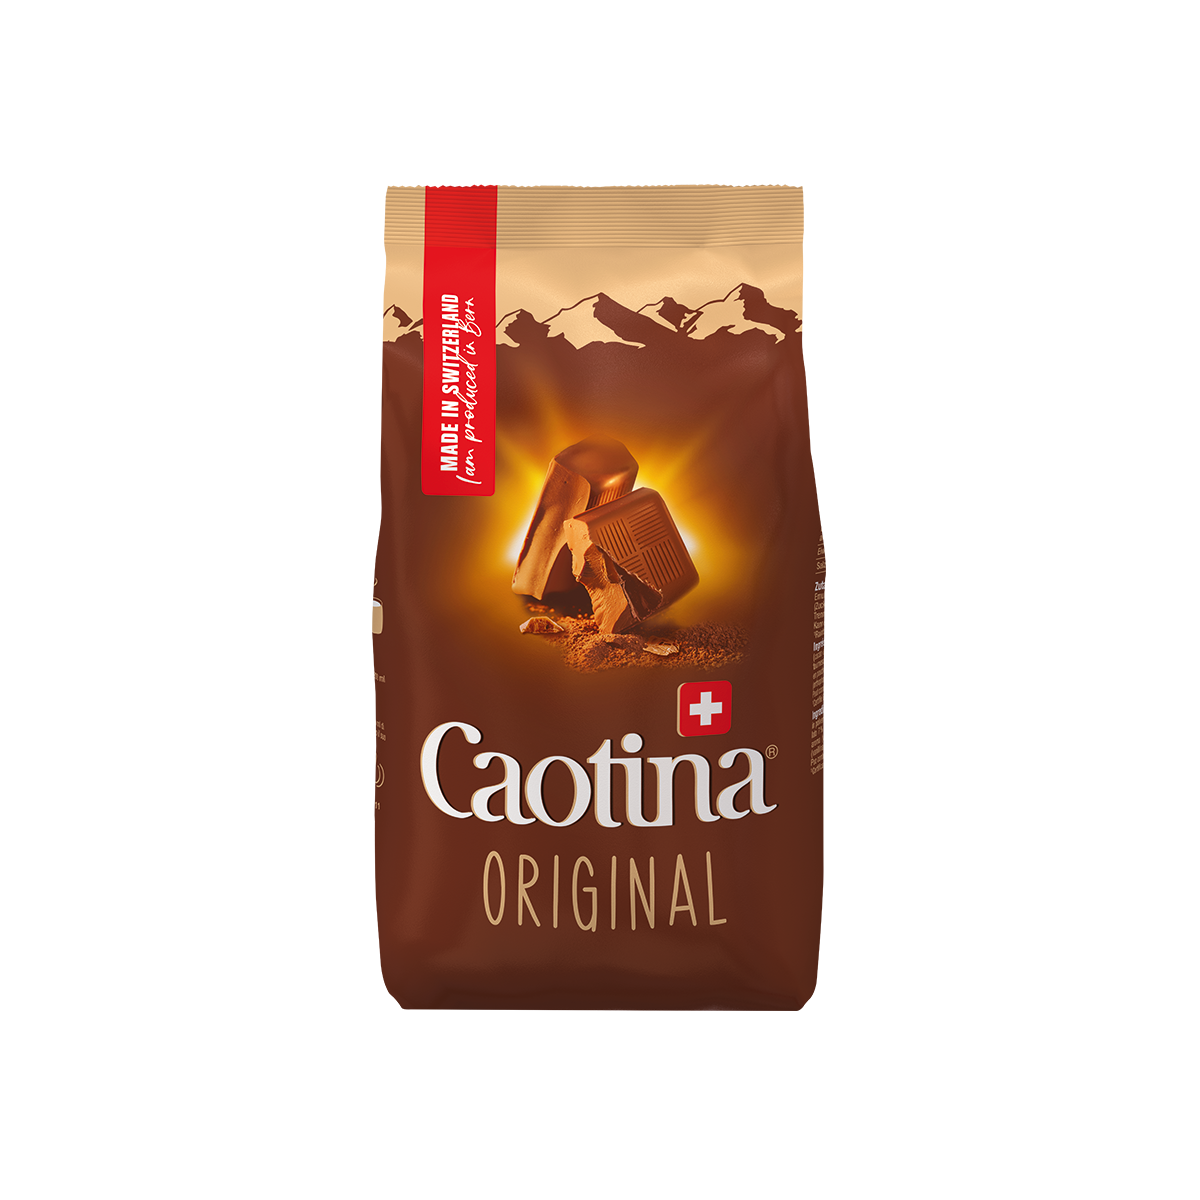  Caotina Original Cacao à boire au chocolat suisse